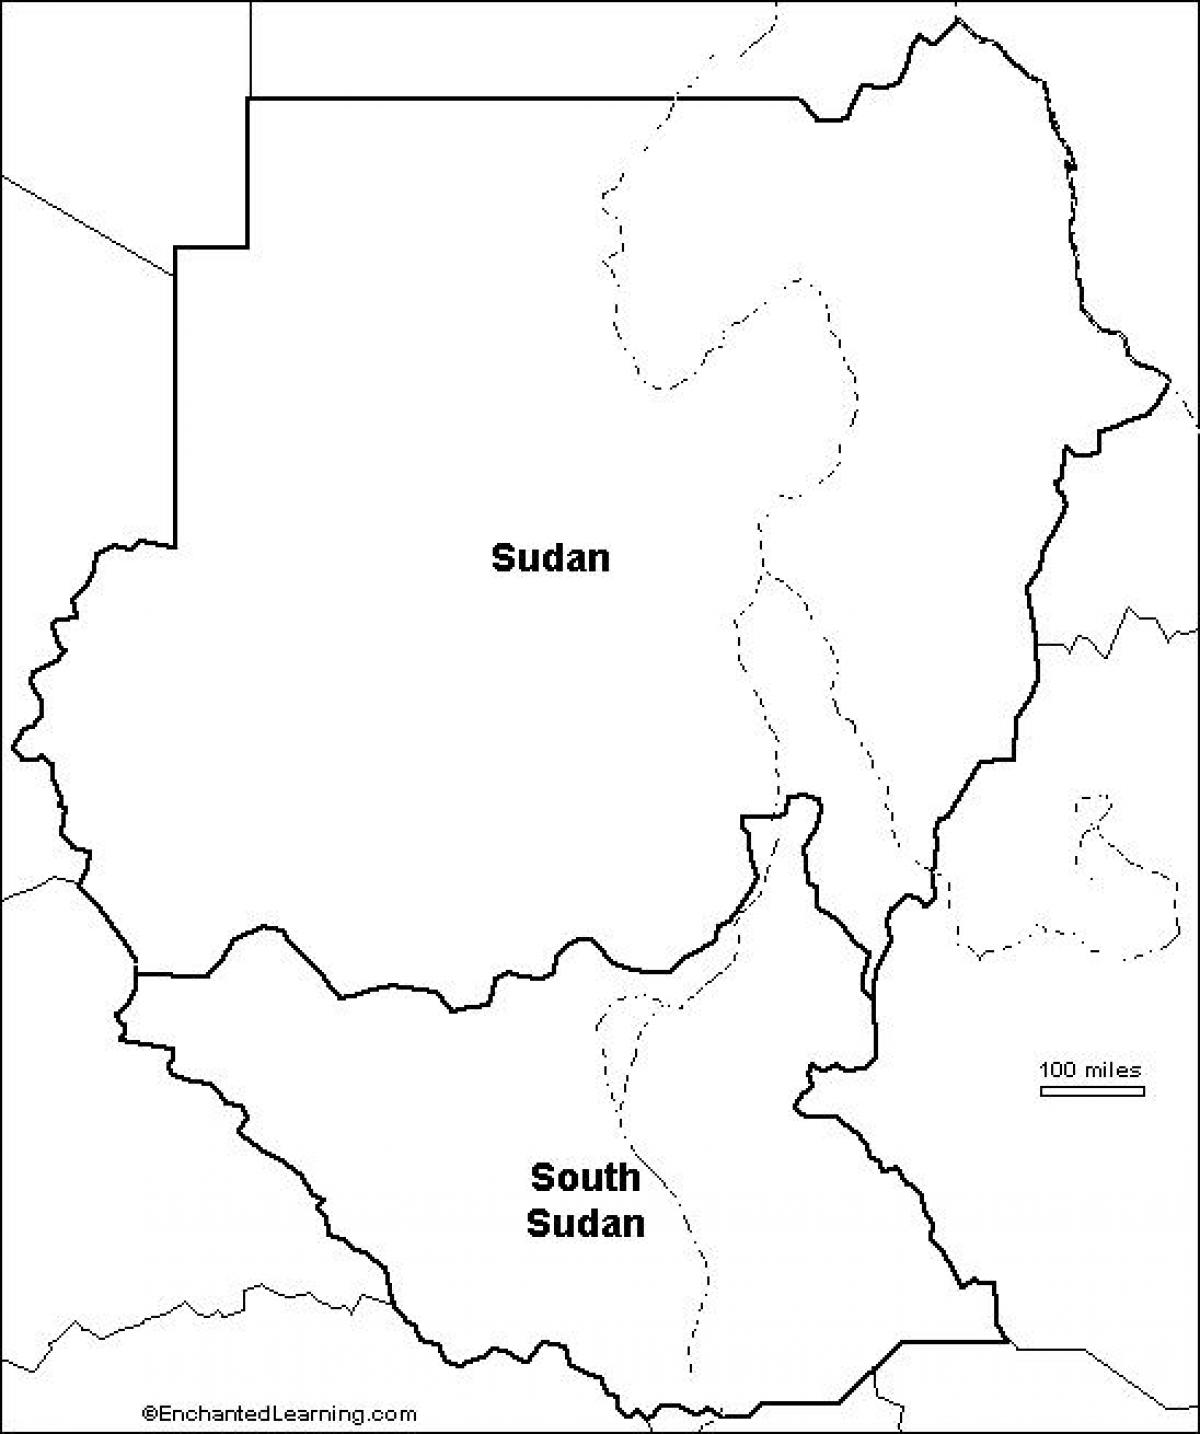 Mapi Sudana prazan